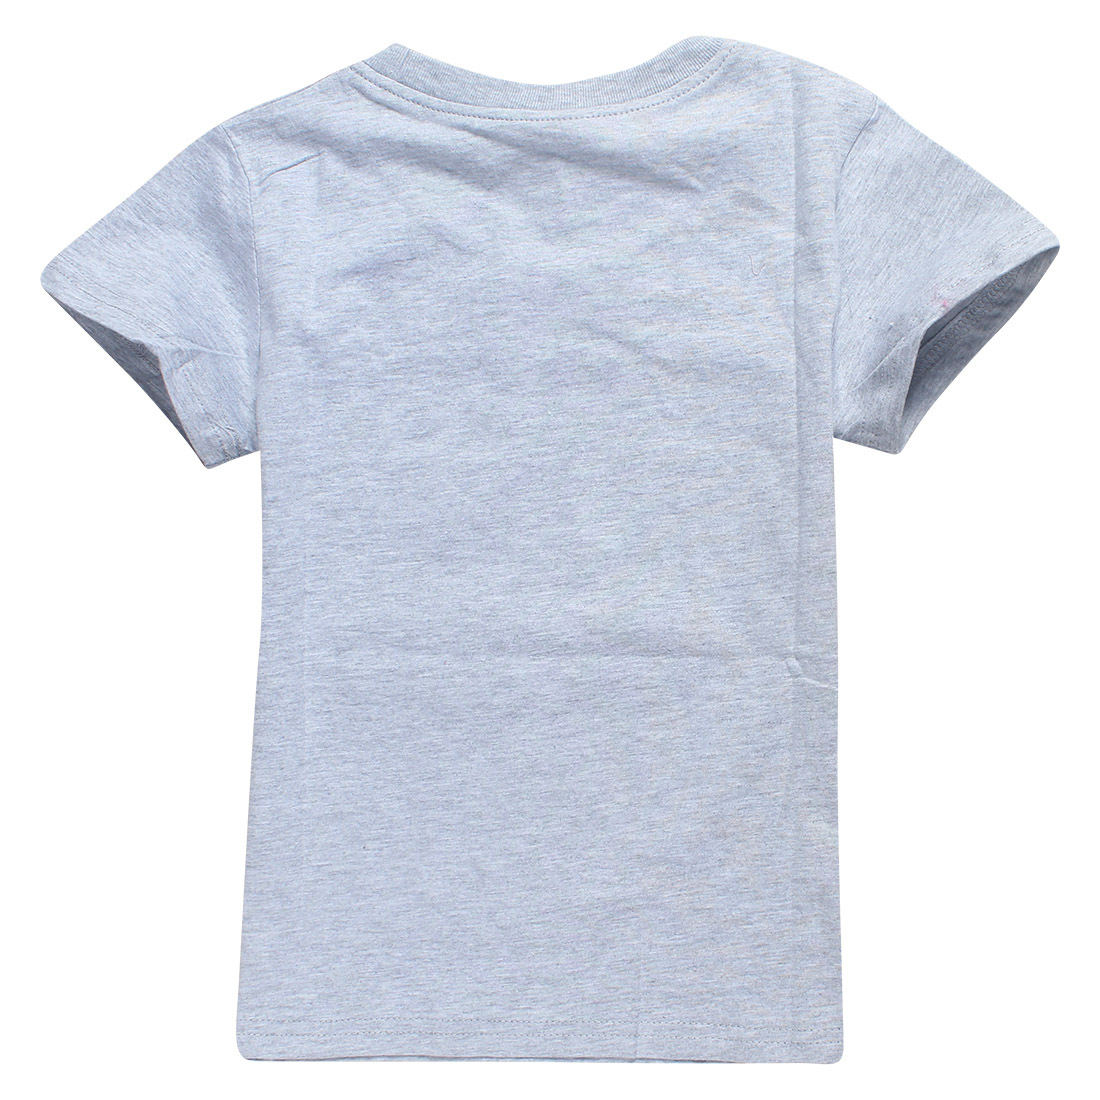 Roblox T Shirts For Kids Eyegemix Com - blue roblox tie t shirt